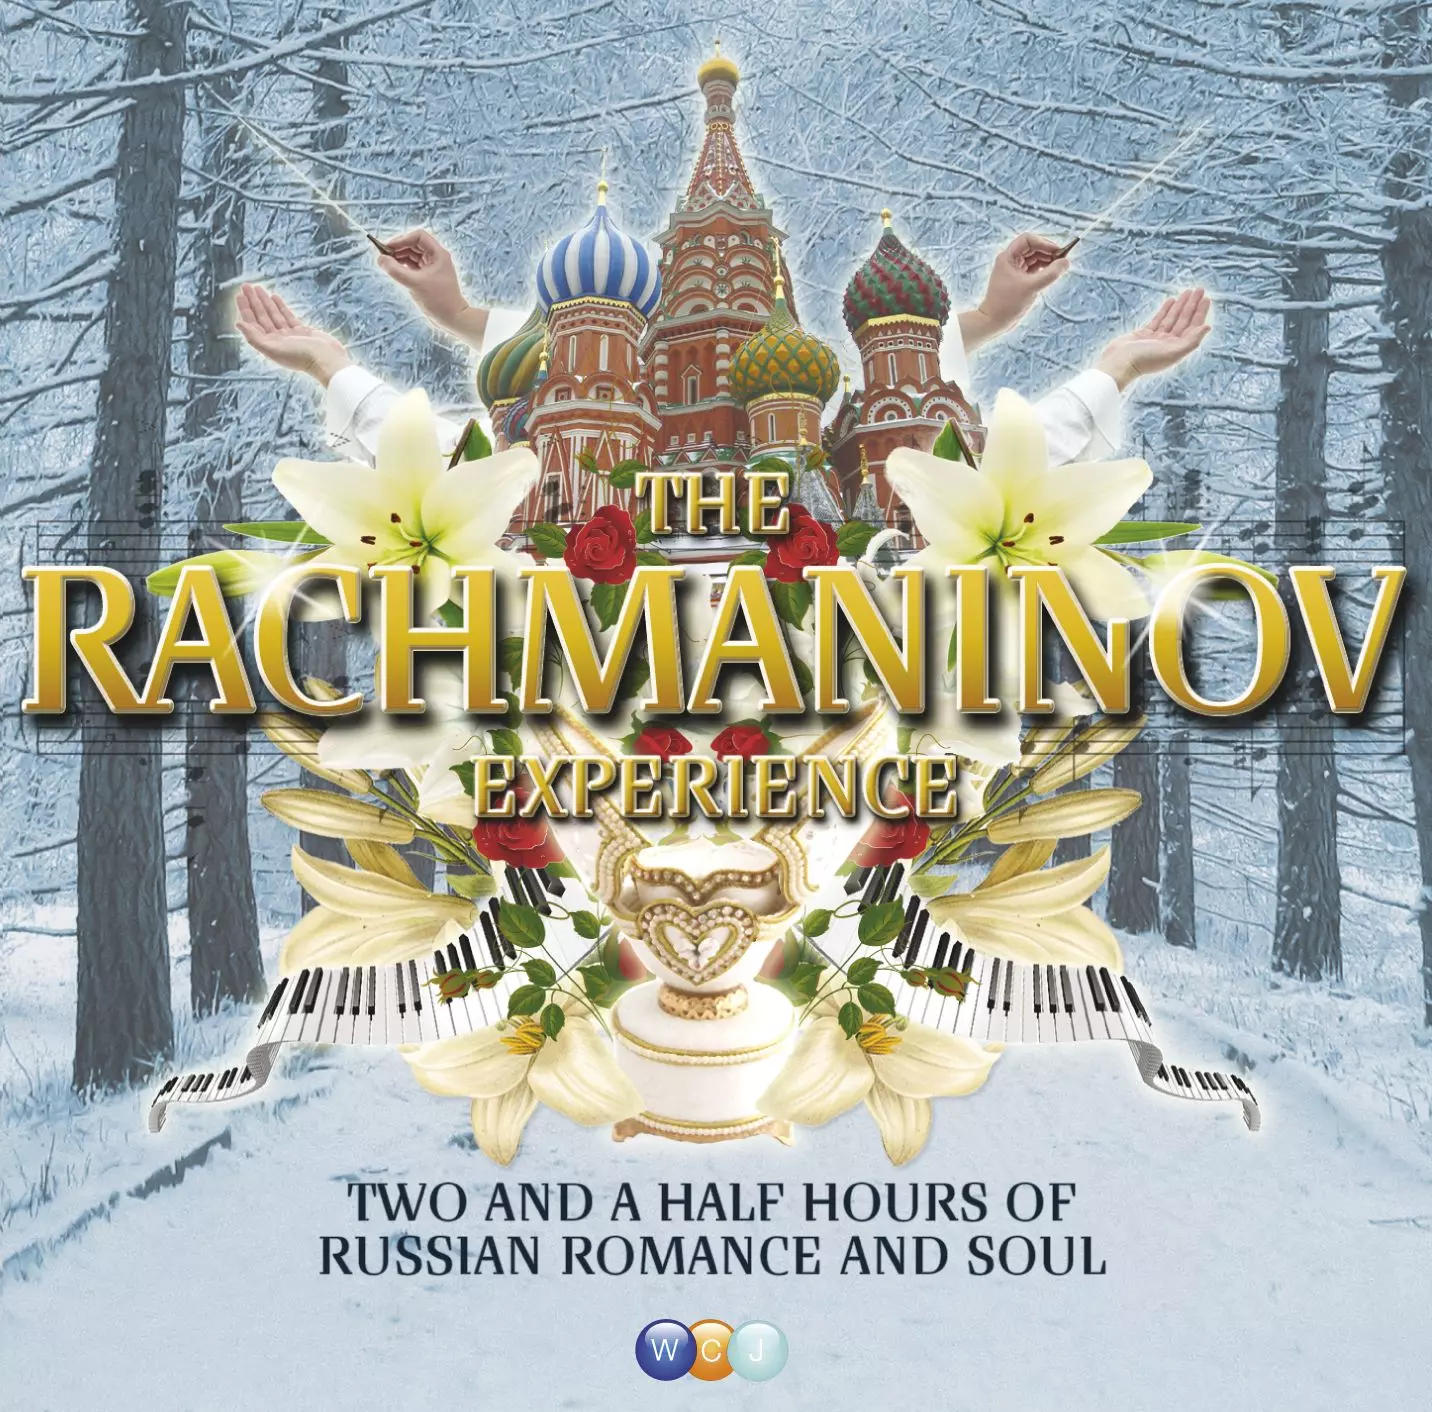 The Rachmaninov Experience